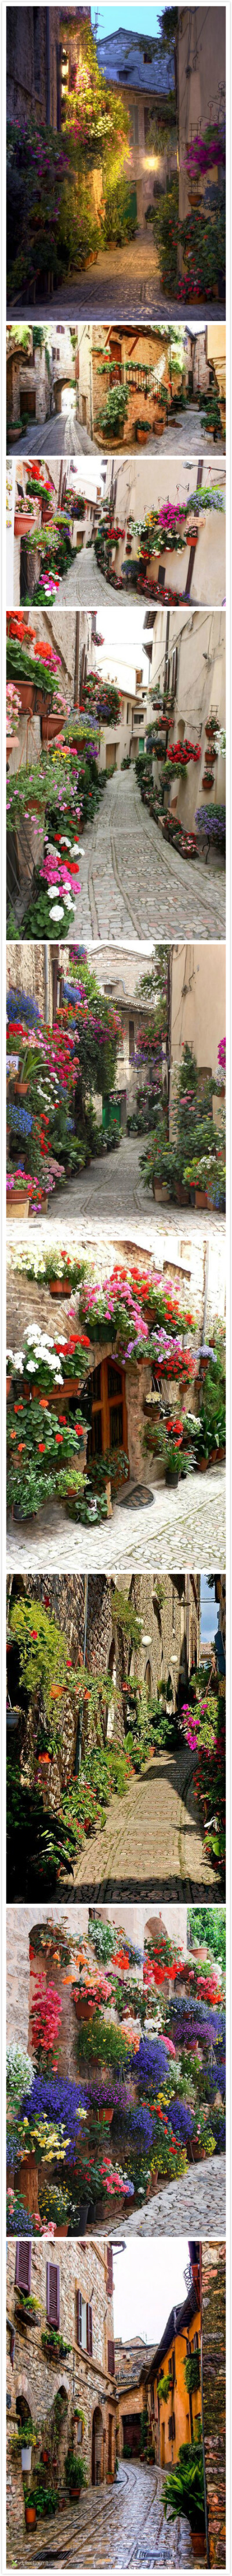 Spello——意大利斯佩罗小镇-最古罗马的小镇，这里不是人们旅行的热门目的地，也许少有人曾听闻它的名字。只是当你不经意间驾车经过，偶然一瞥，会被这满城的灿烂鲜花攫取了全部的心神。